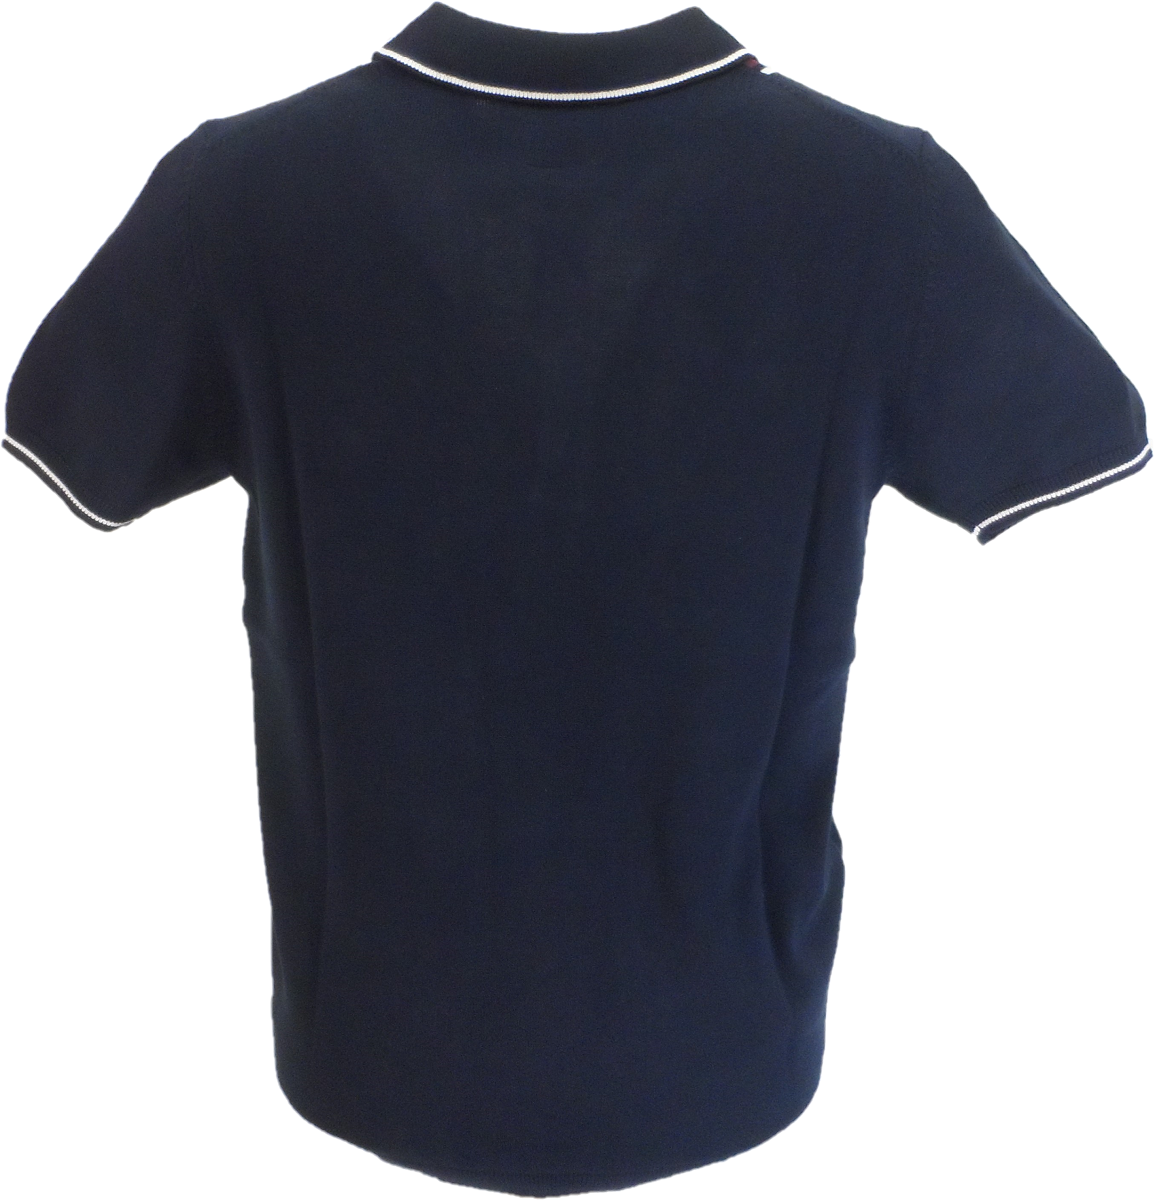 Marineblaues Herren-Poloshirt aus Greco-Strick Lambretta